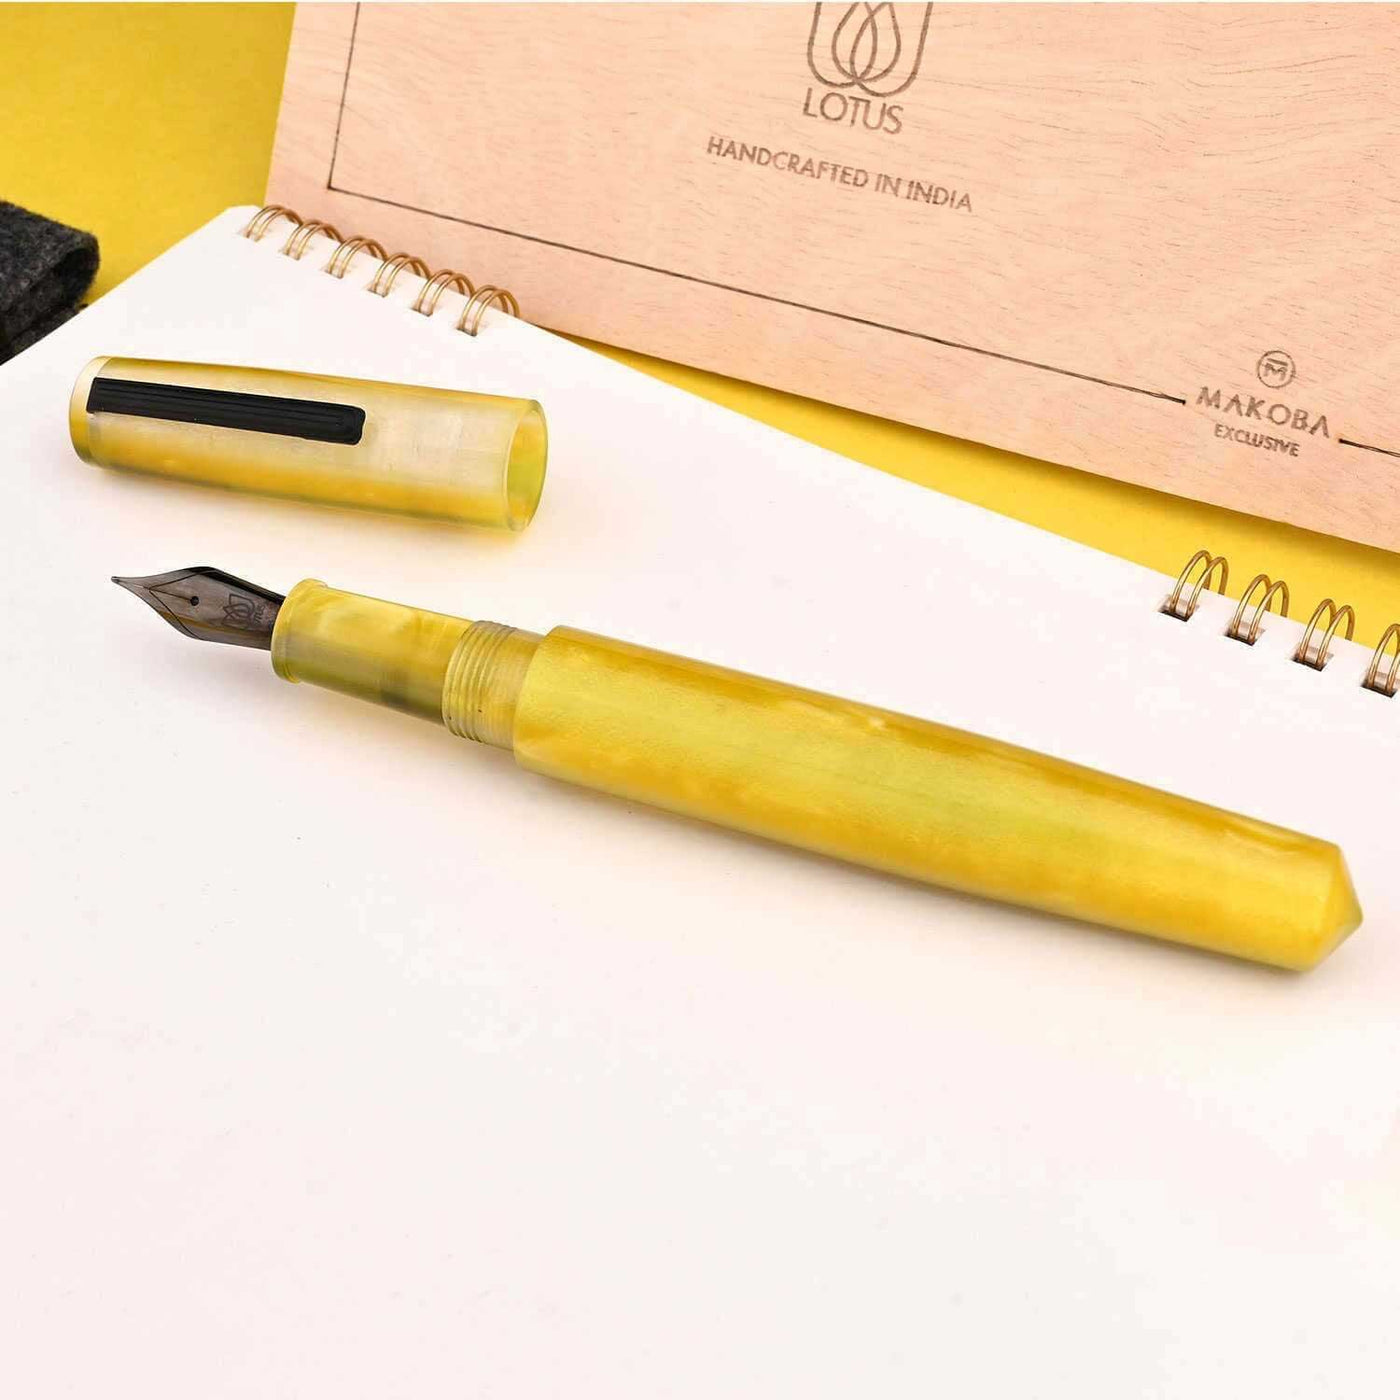 Lotus Saral Halos Special Edition Fountain Pen Ocherous Steel Nib 1